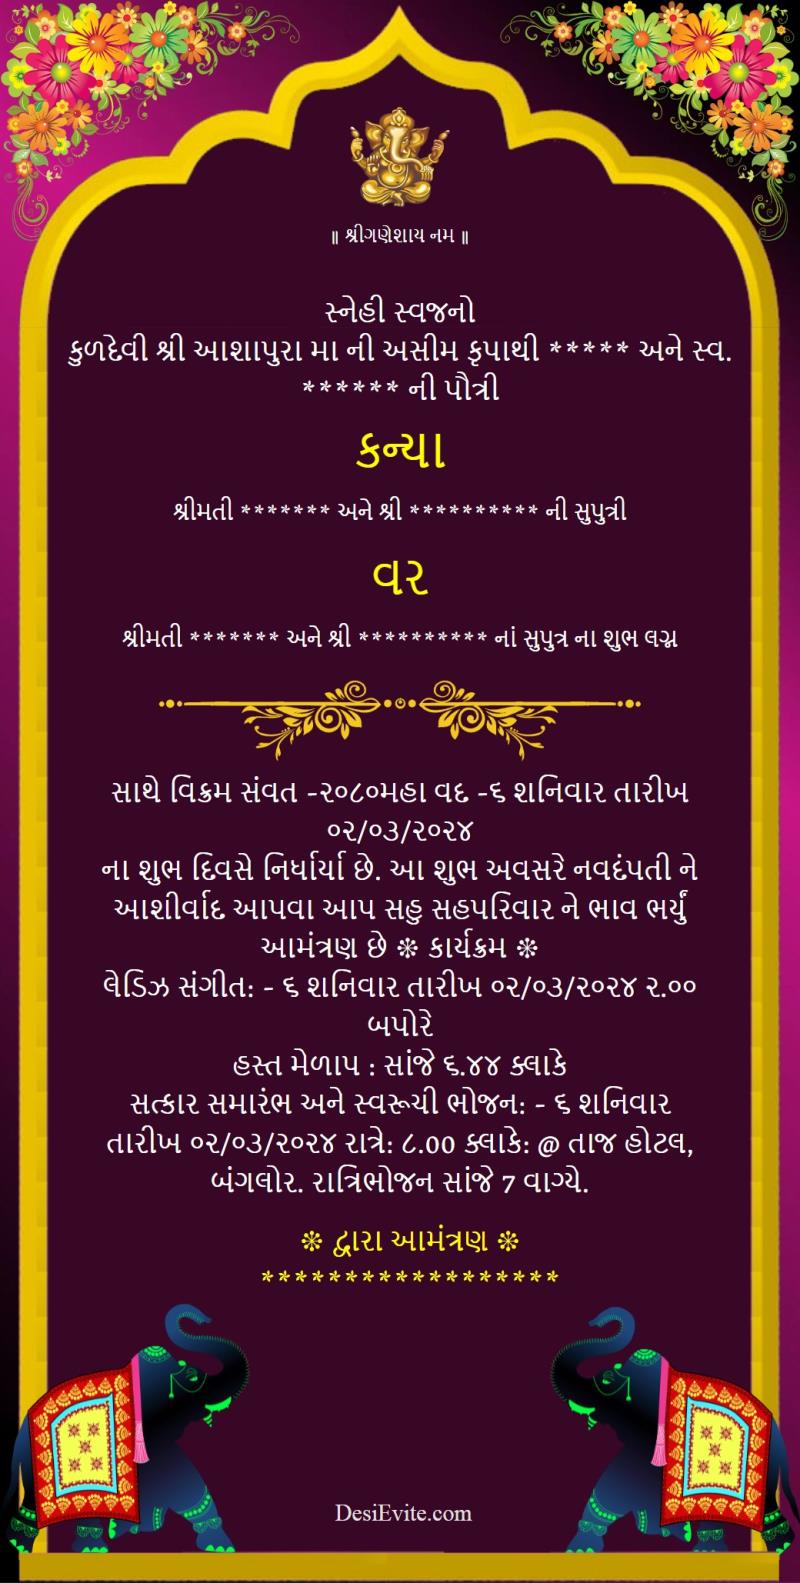 Gujarati elephant theme wedding card 166